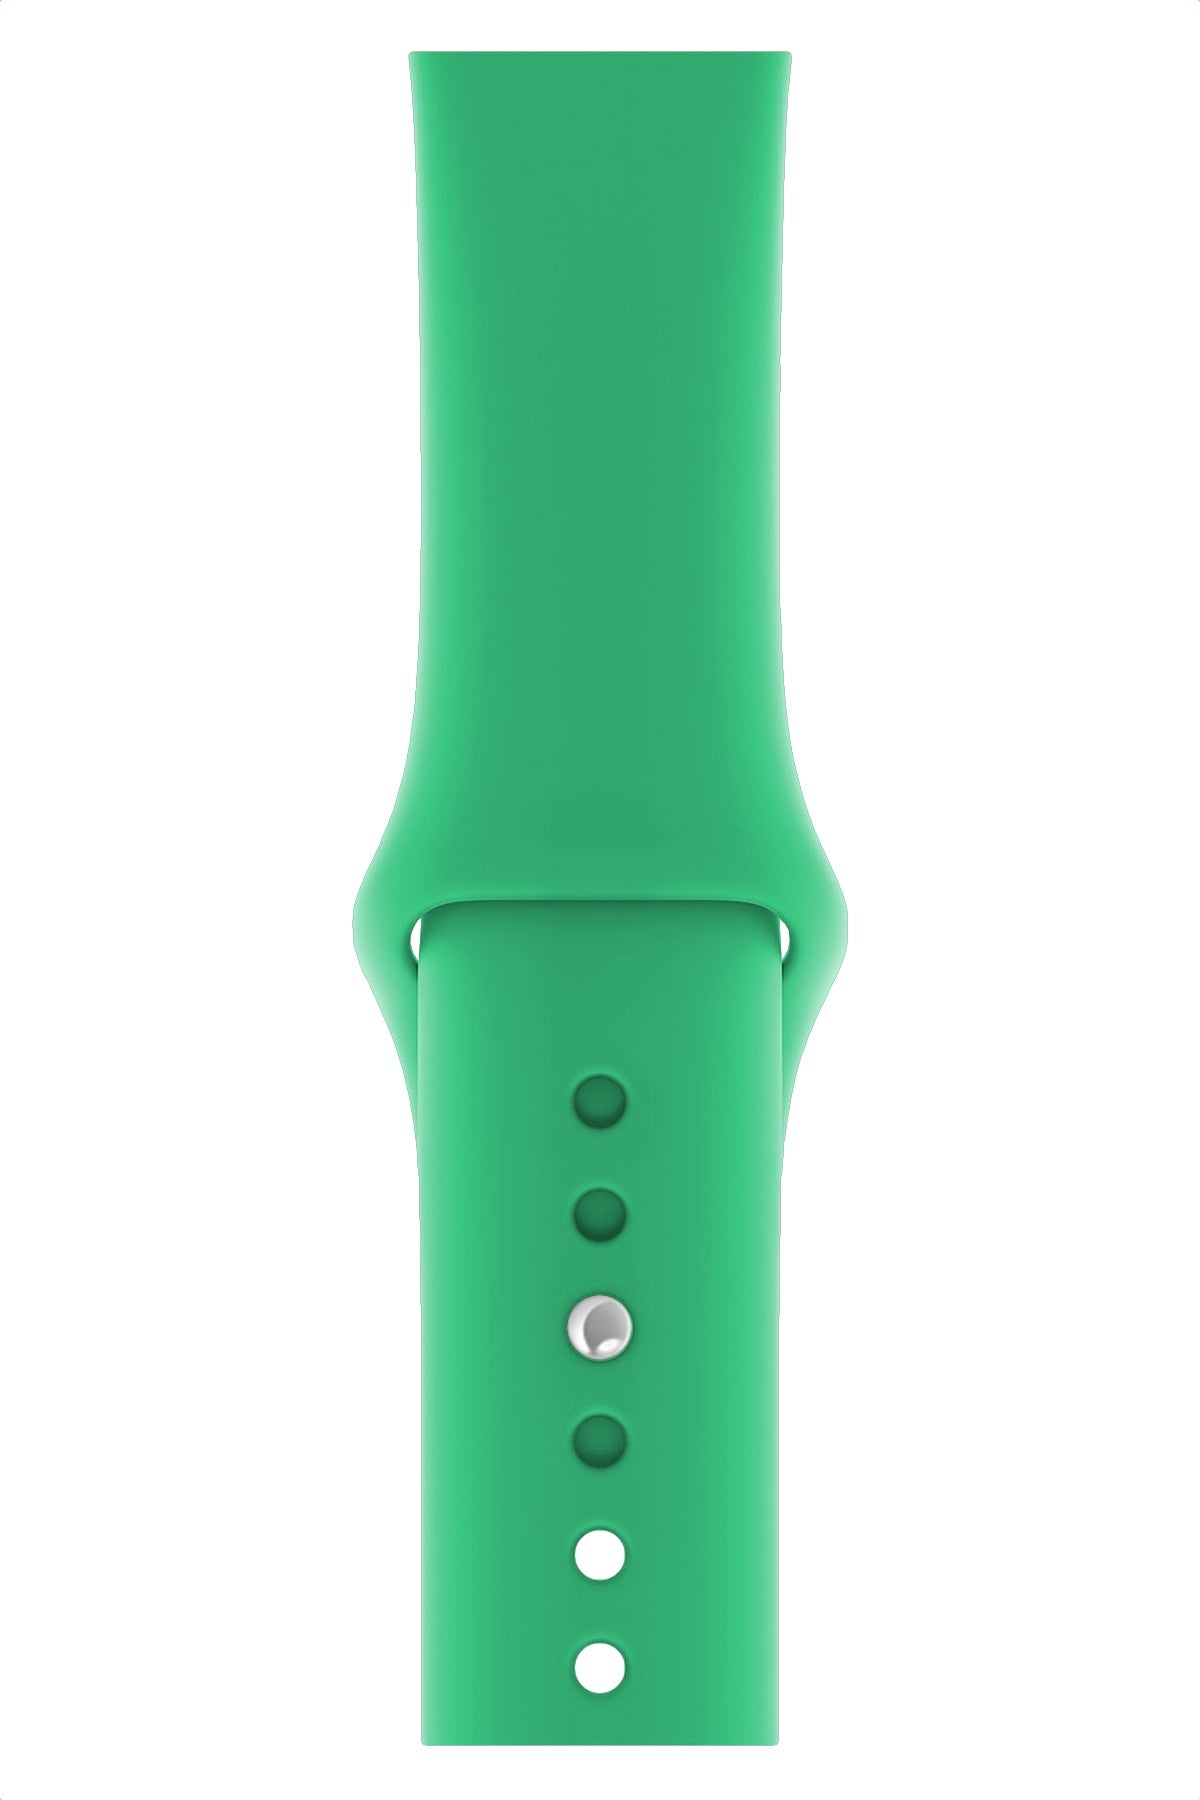 Apple Watch Uyumlu Silikon Spor Kordon Ihlamur Yeşil